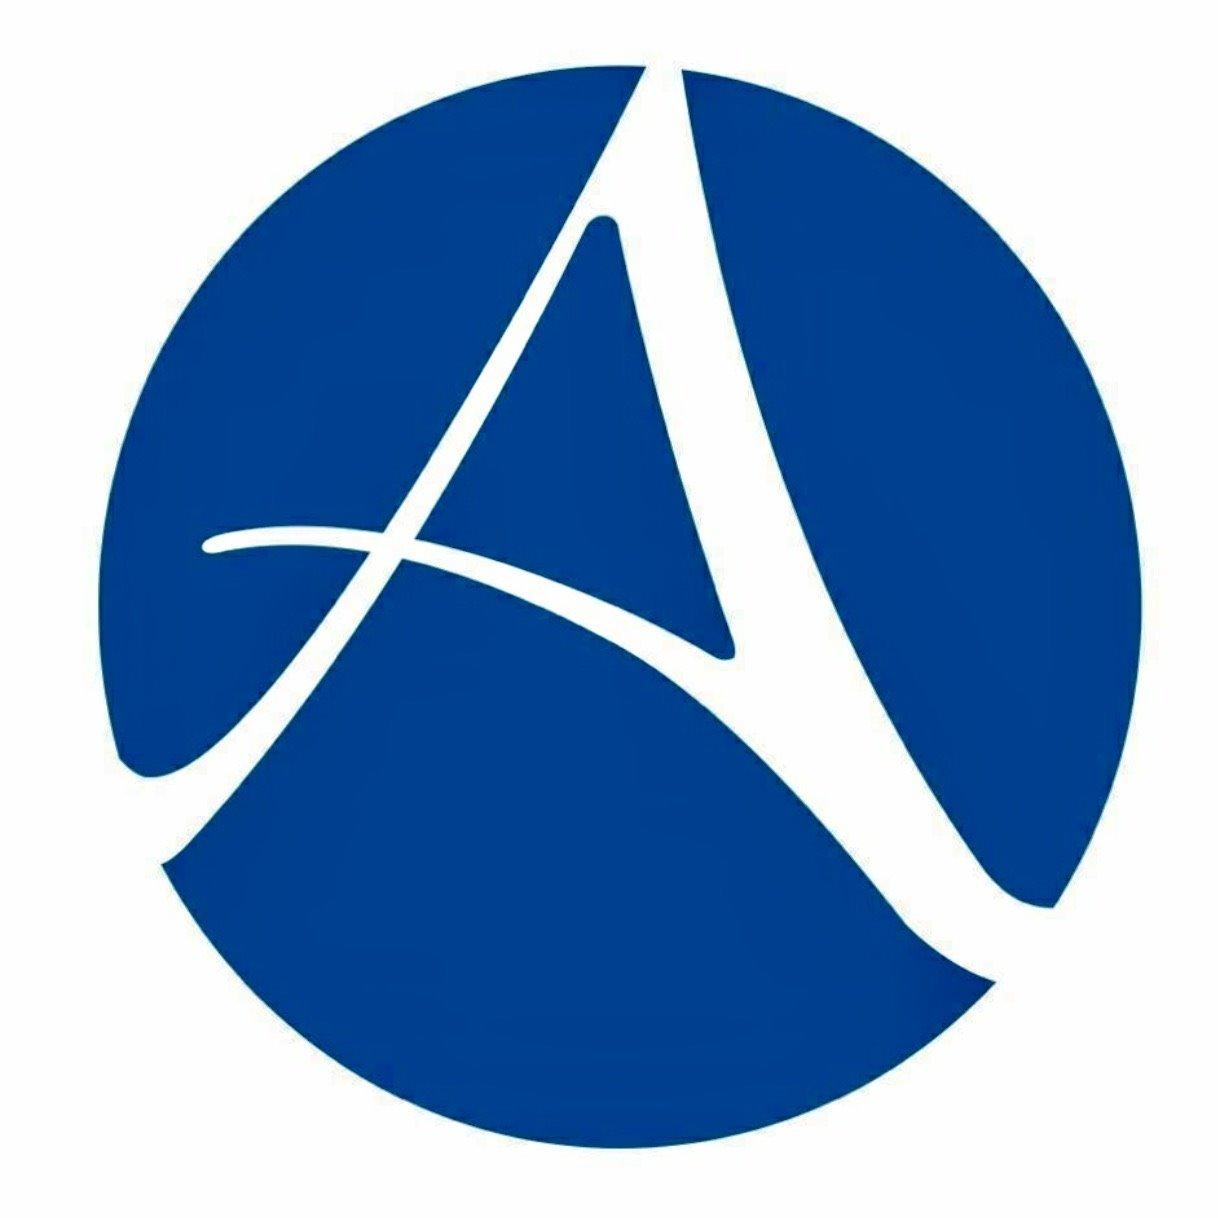 Alliance Roofing, LLC Logo